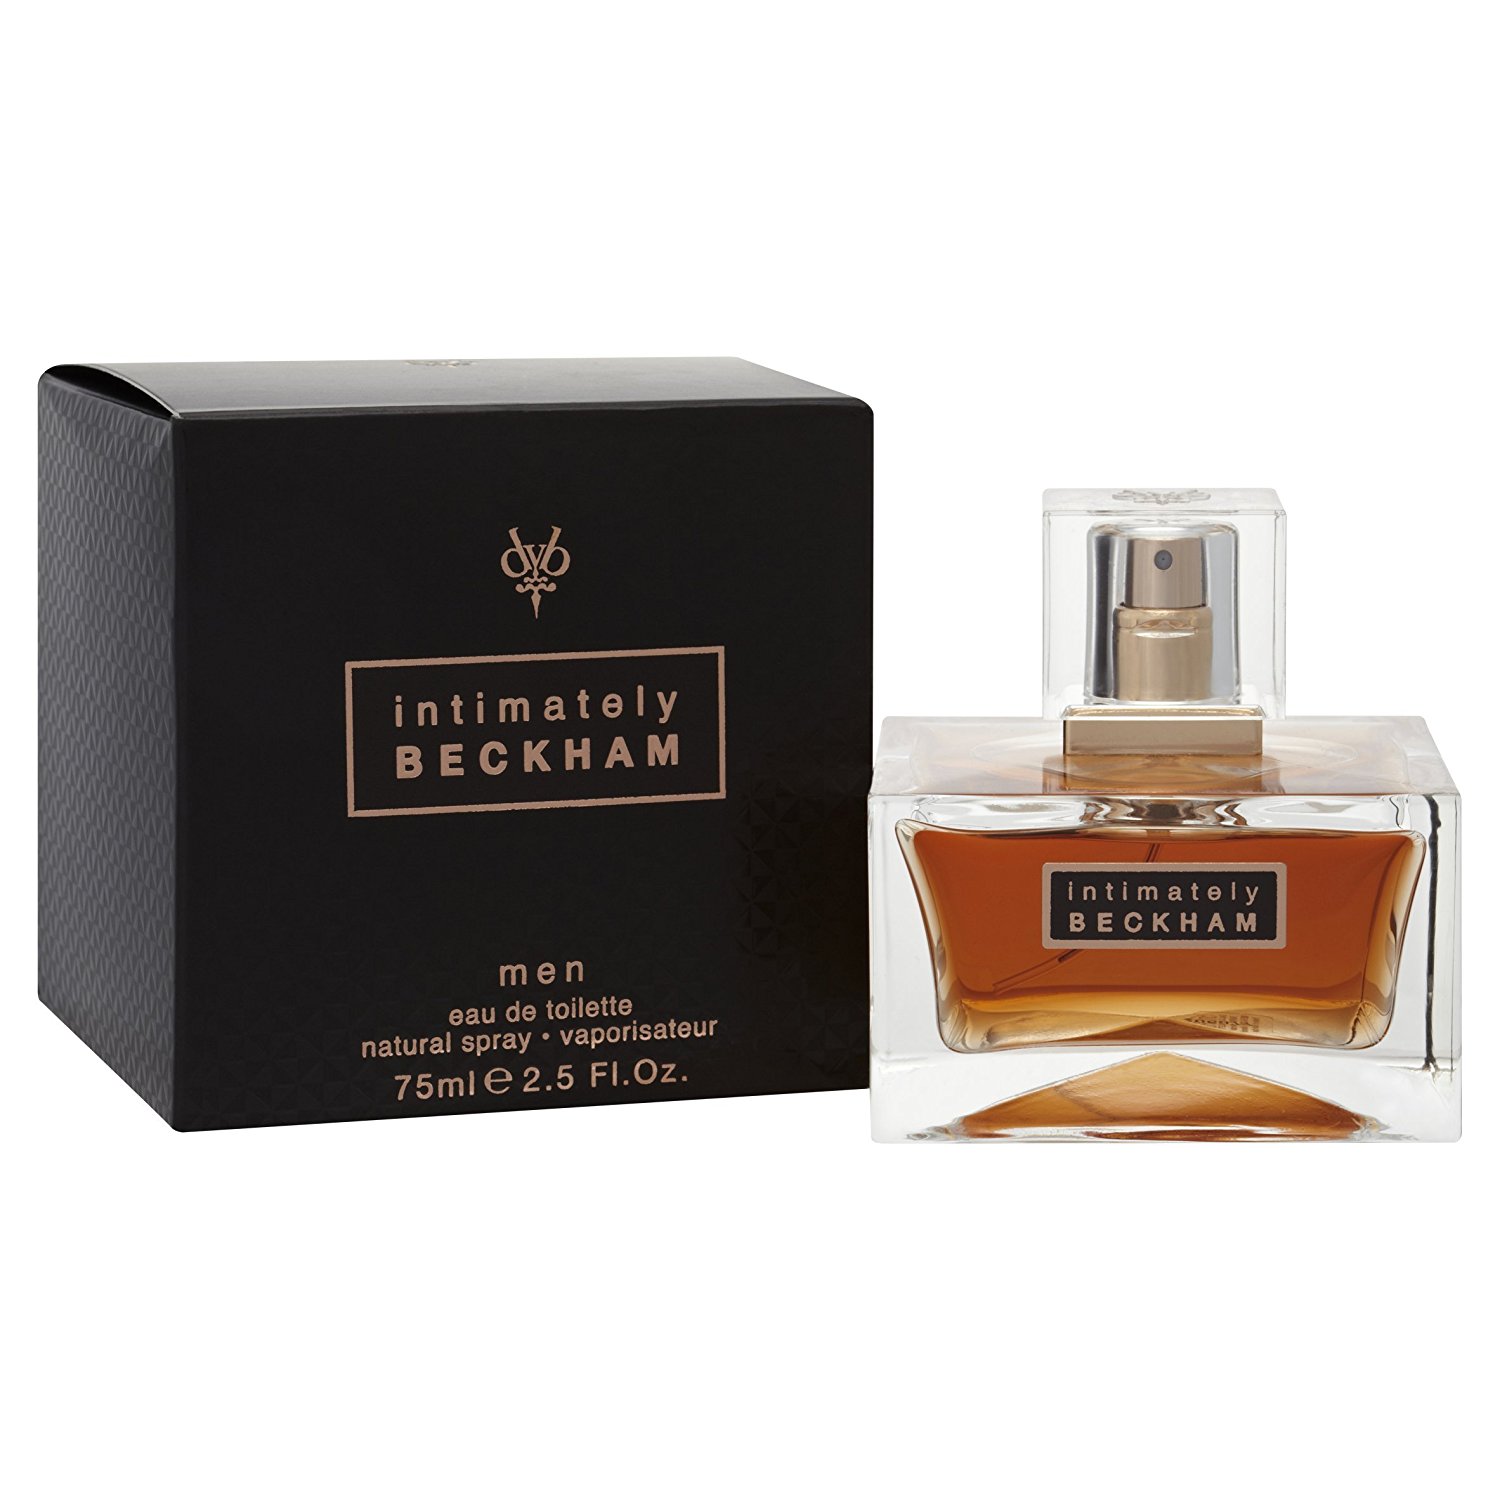 David Beckham Intimately Perfume Gift To London - Courier ...